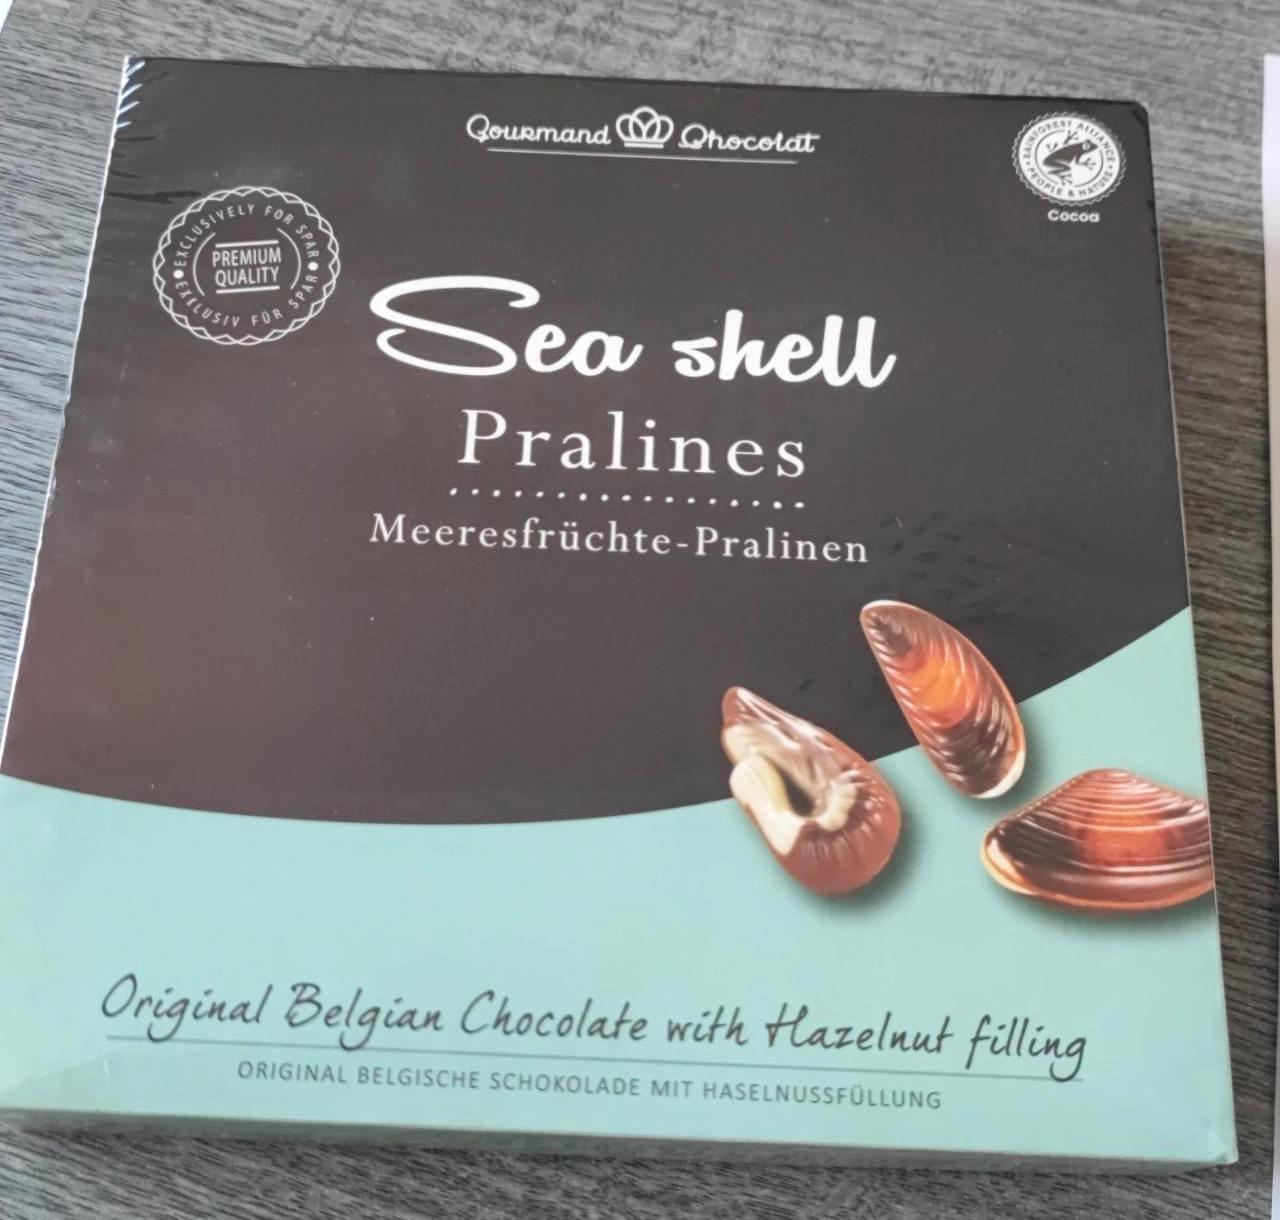 Képek - Sea shell pralines Gourmand chocolat